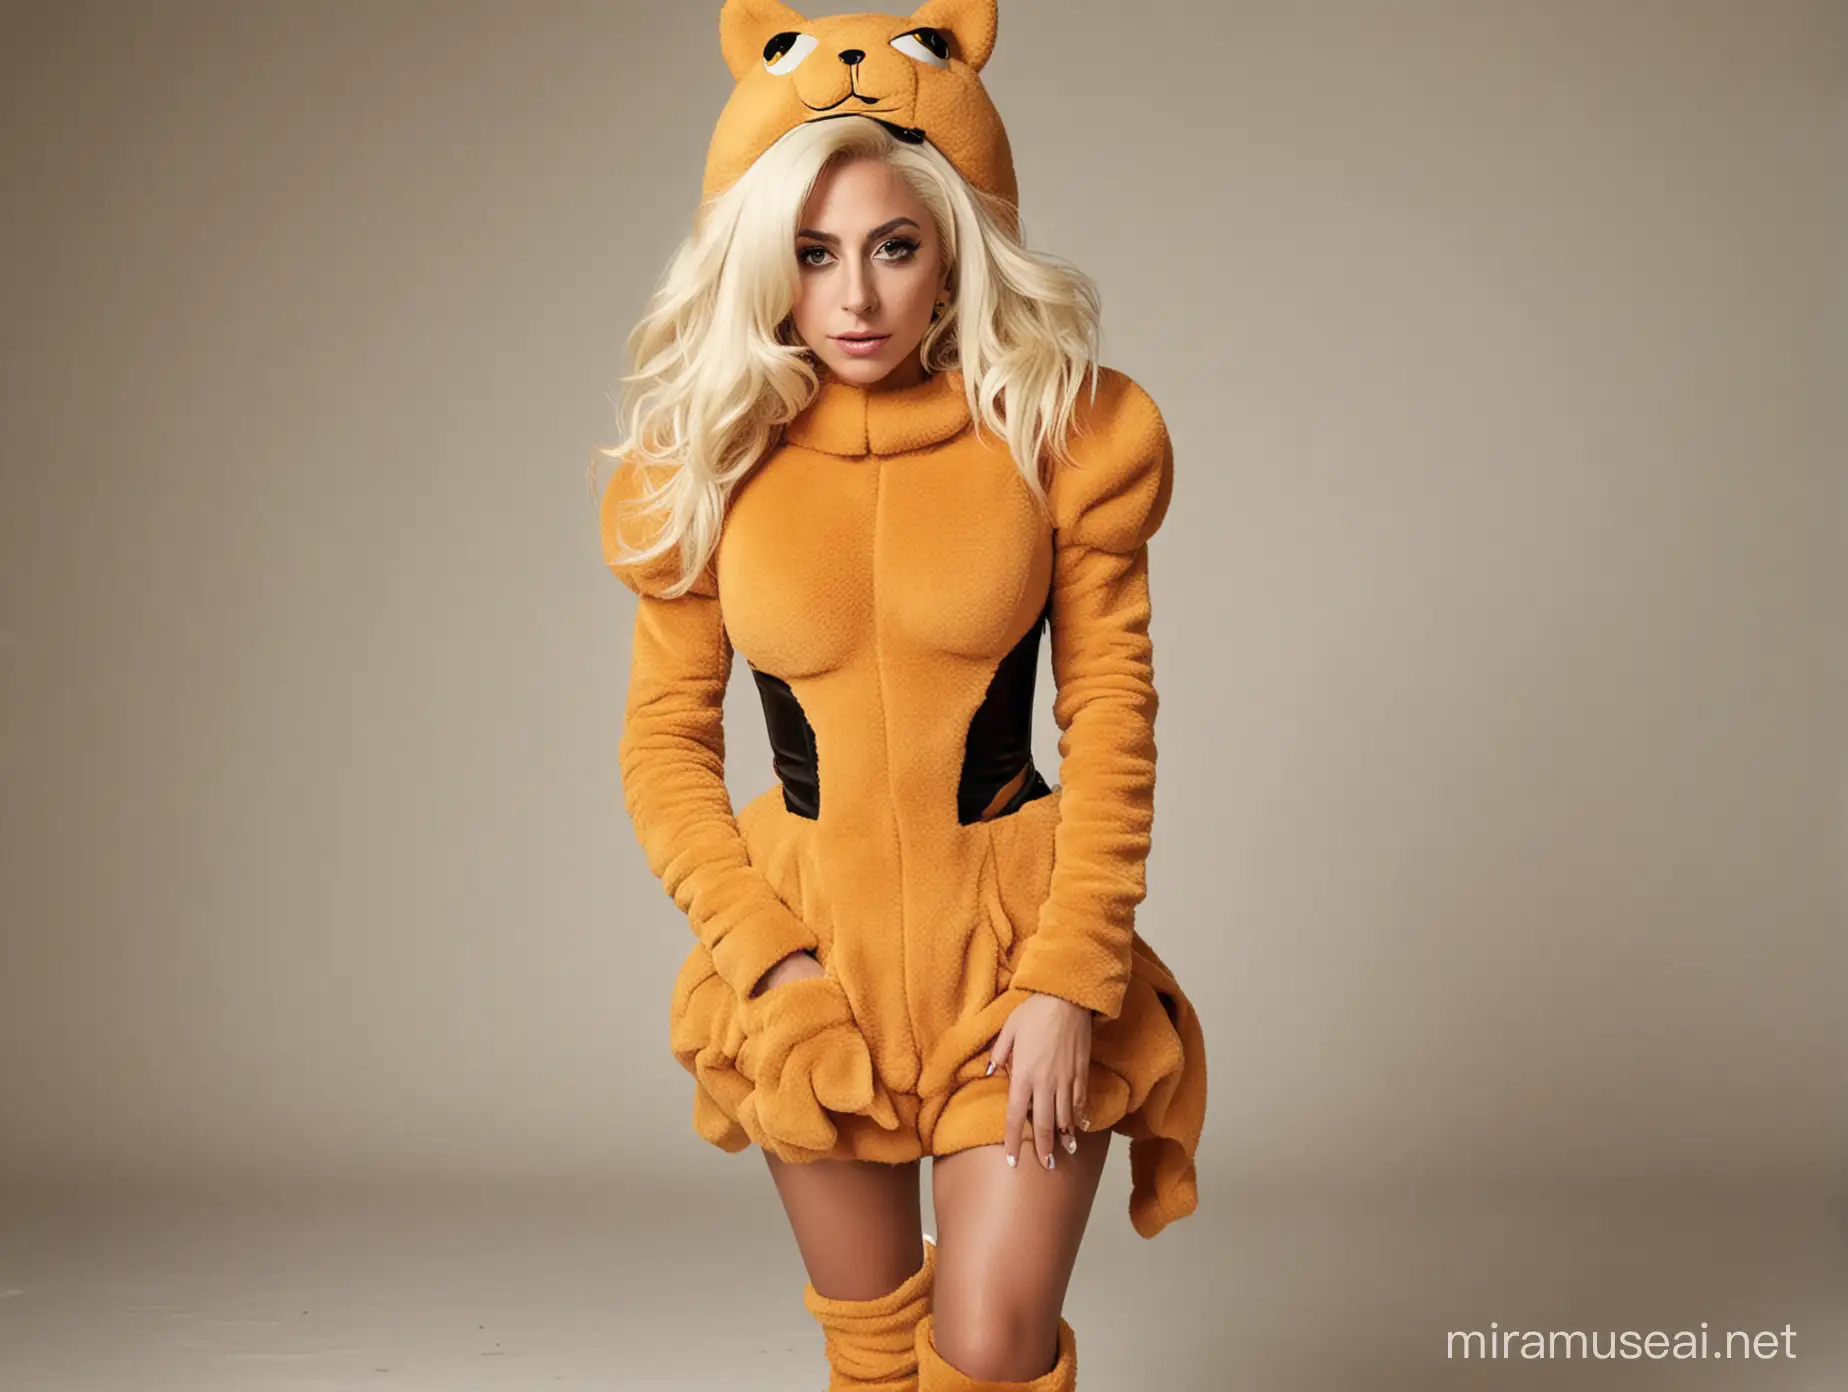 Lady Gaga Wearing Garfield Costume Quirky Fashion Statement